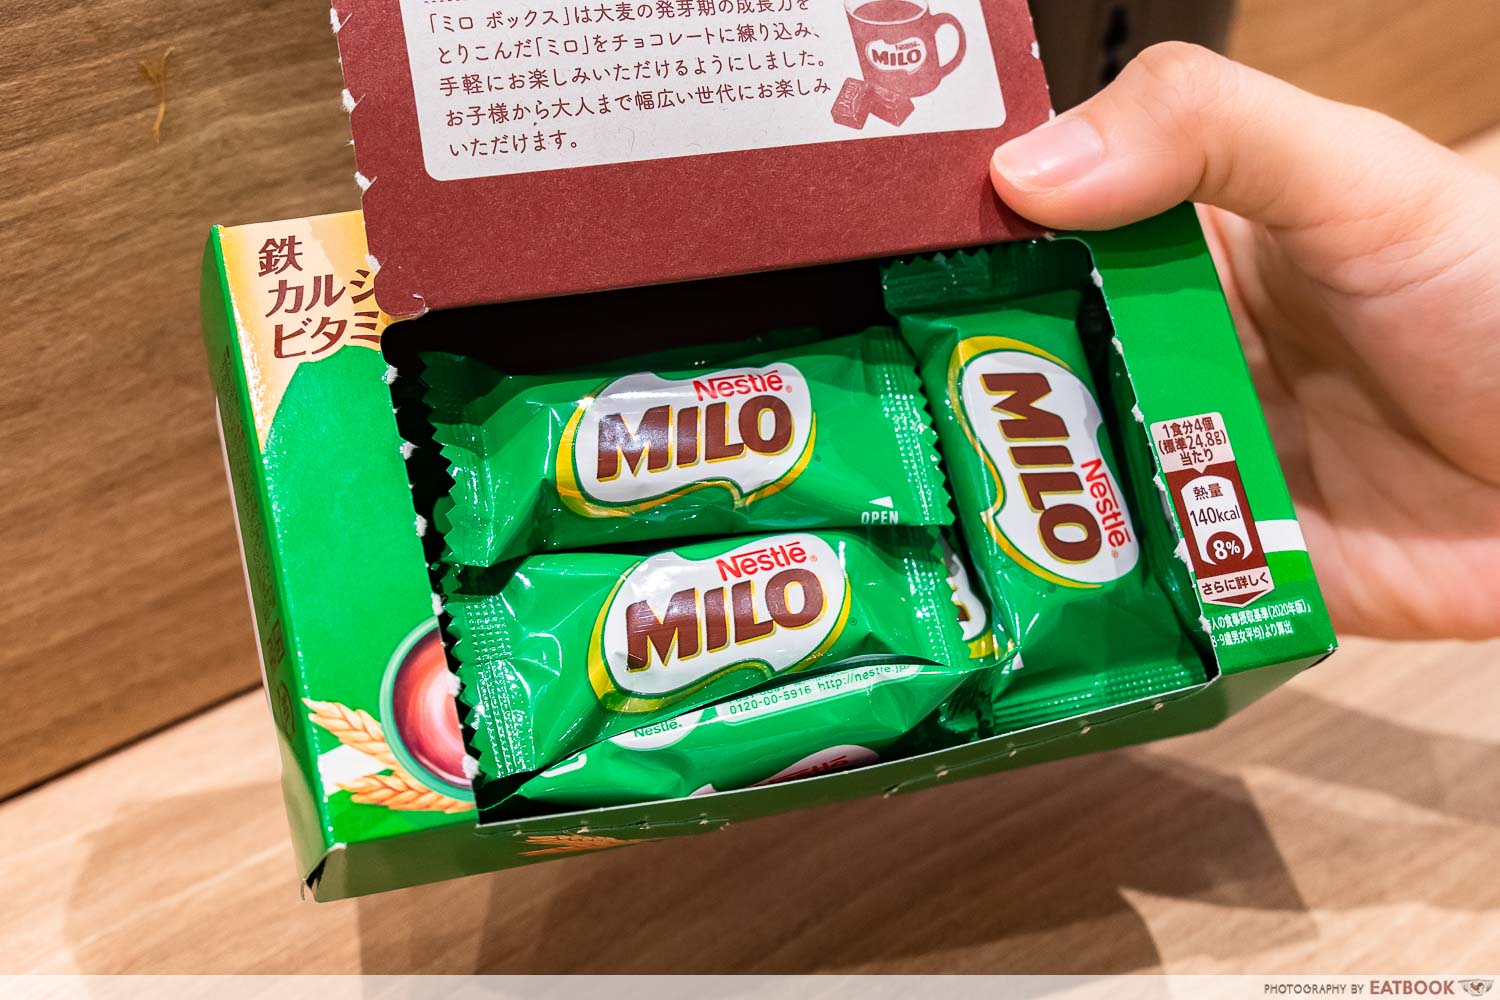 Milo DDDK - inside of box